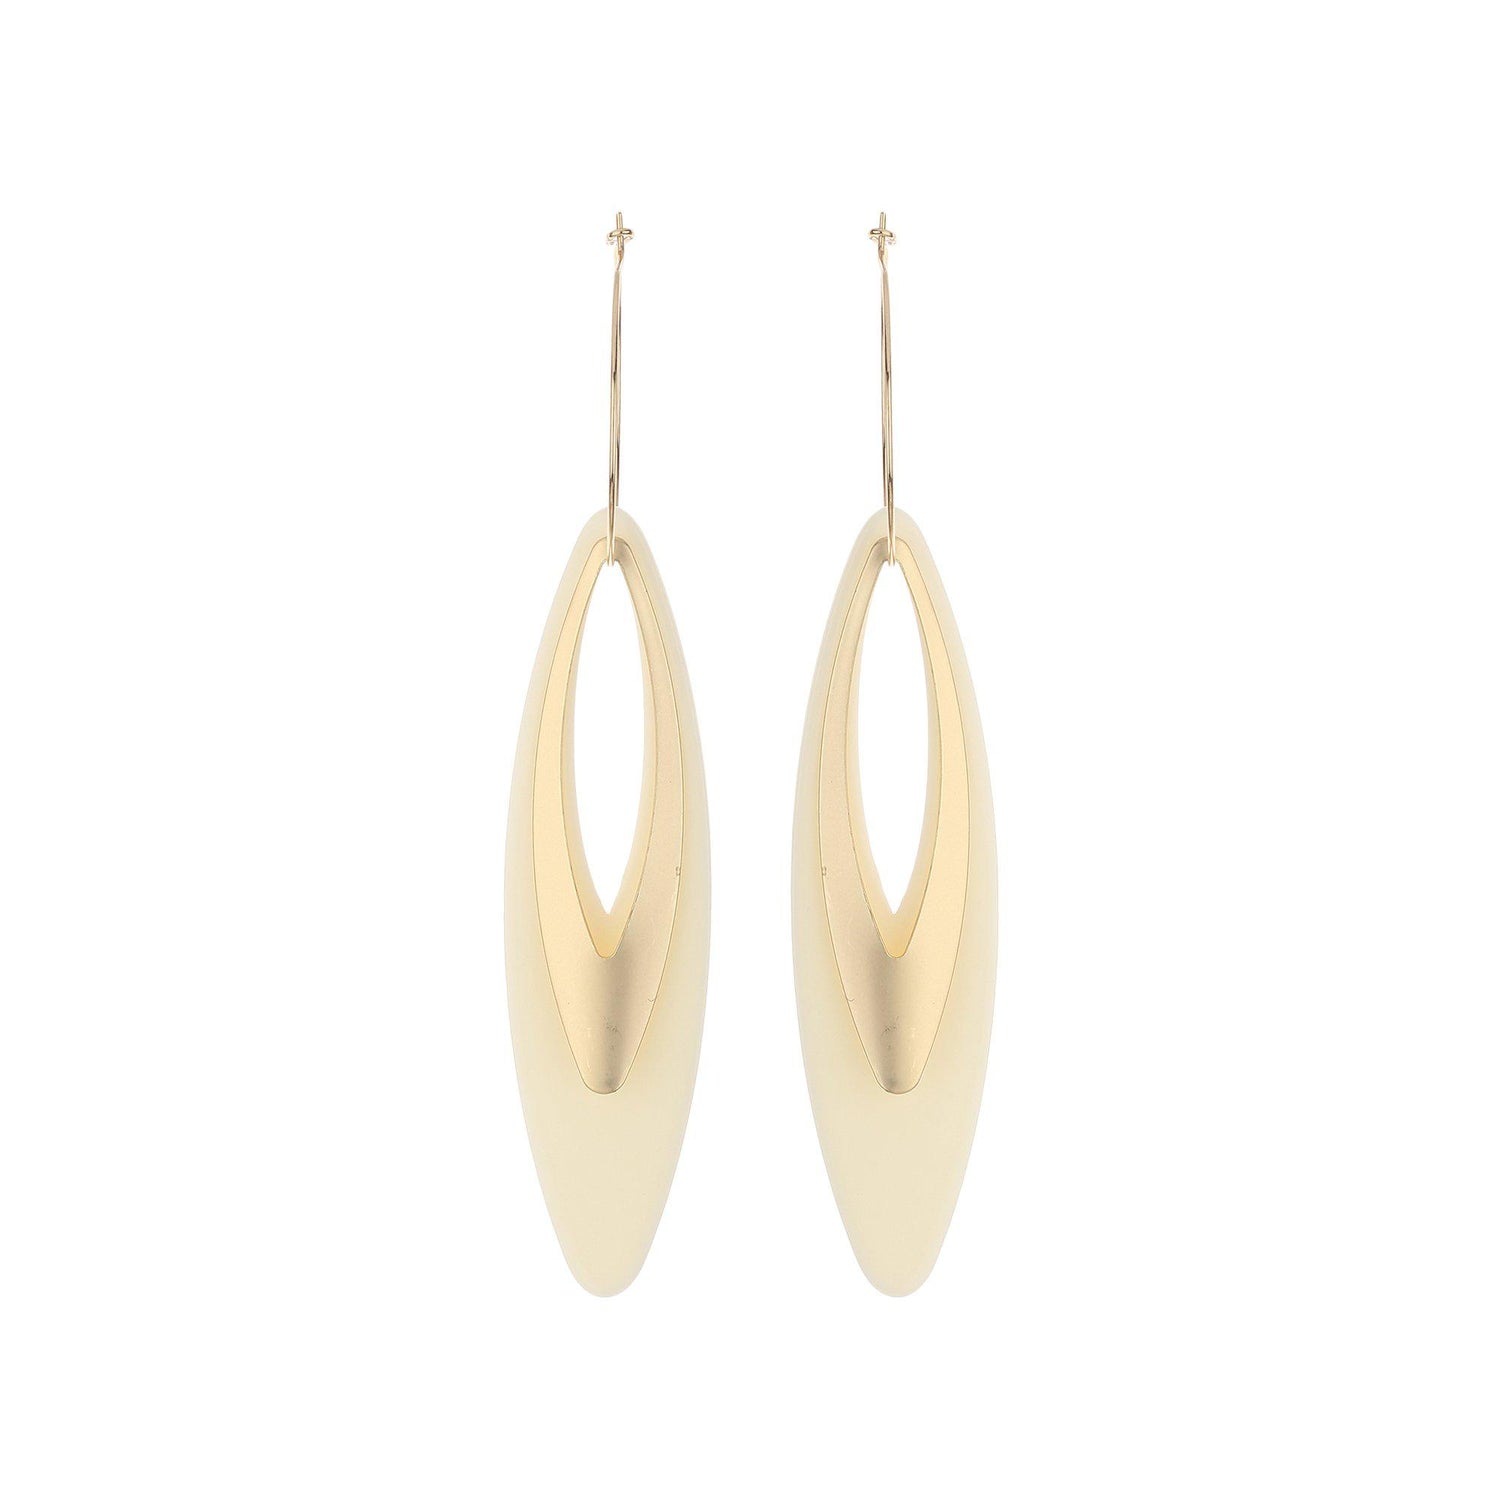 Designer Oval Shape Earrings-Earrings-ONESKYSHOP